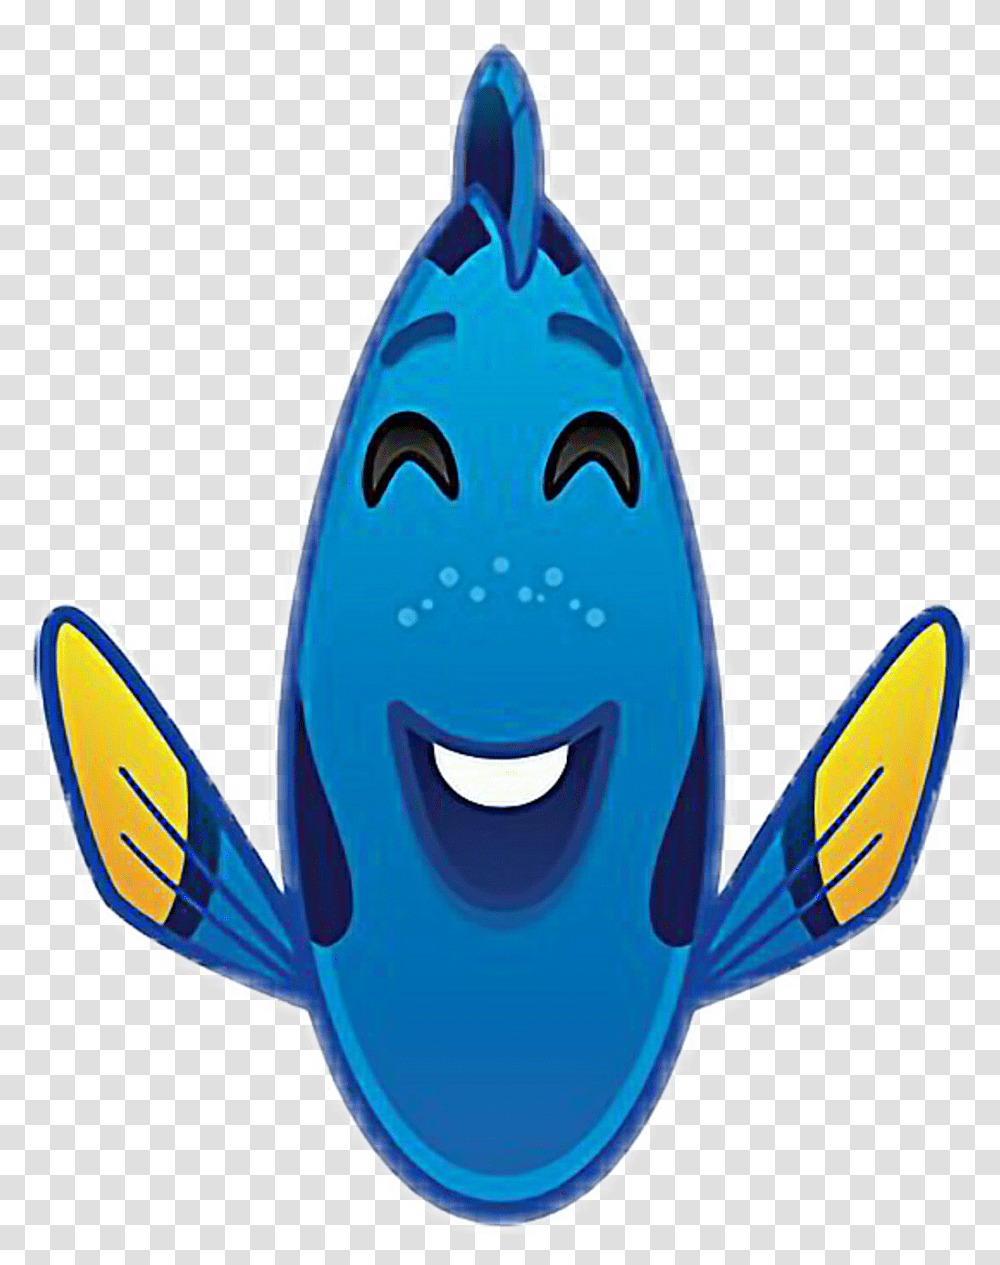 Disney Emoji Blitz Dory Download Disney Emoji Finding Nemo, Animal, Sea Life, Blue Jay, Bird Transparent Png